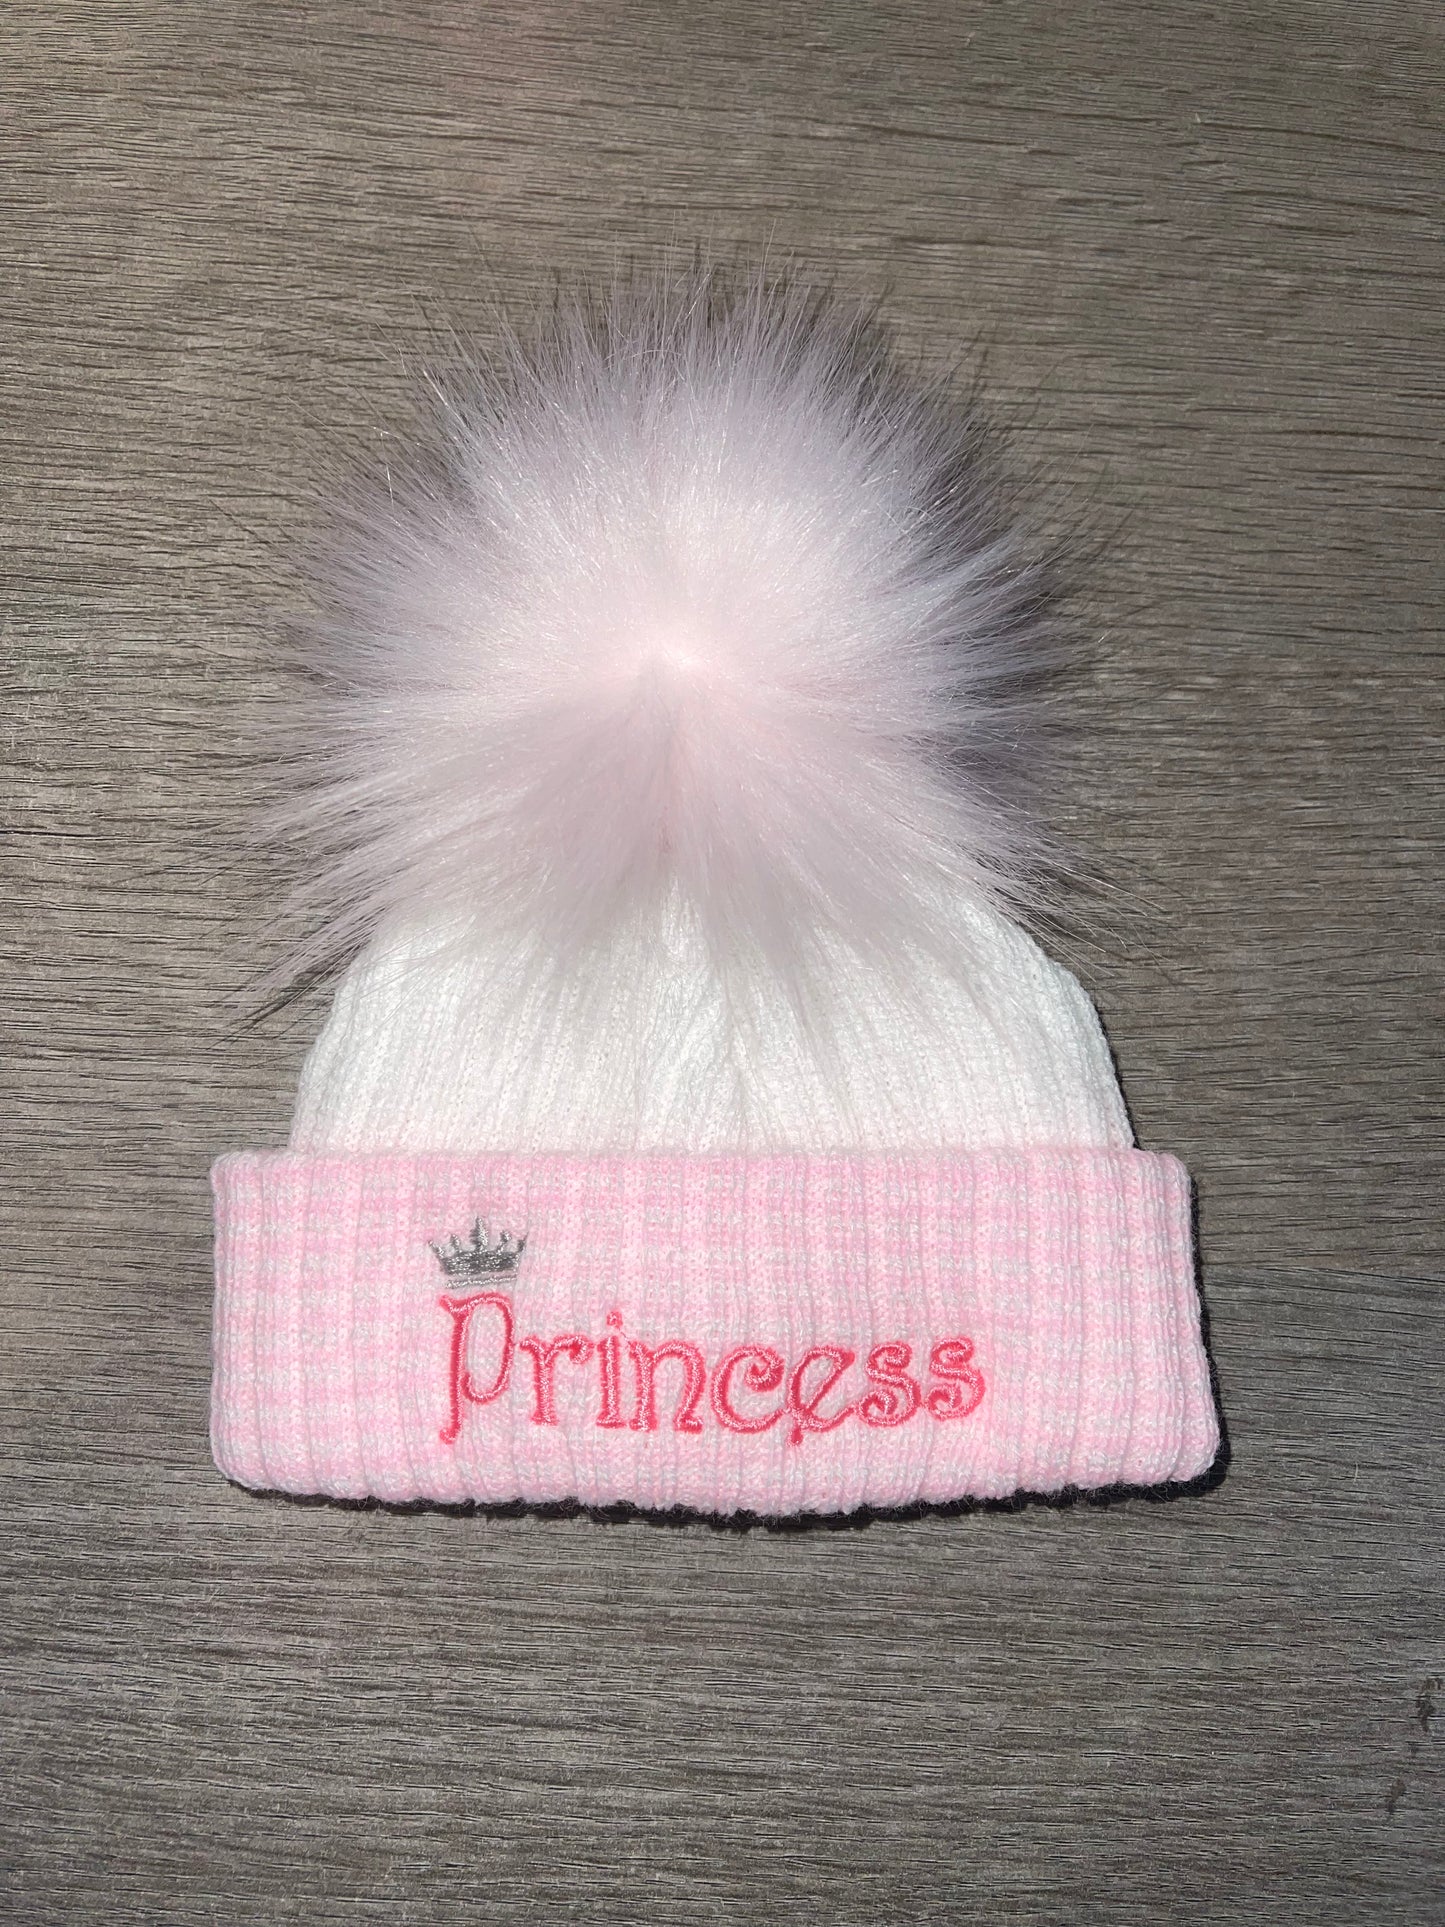 Princess pom pom hat - newborn